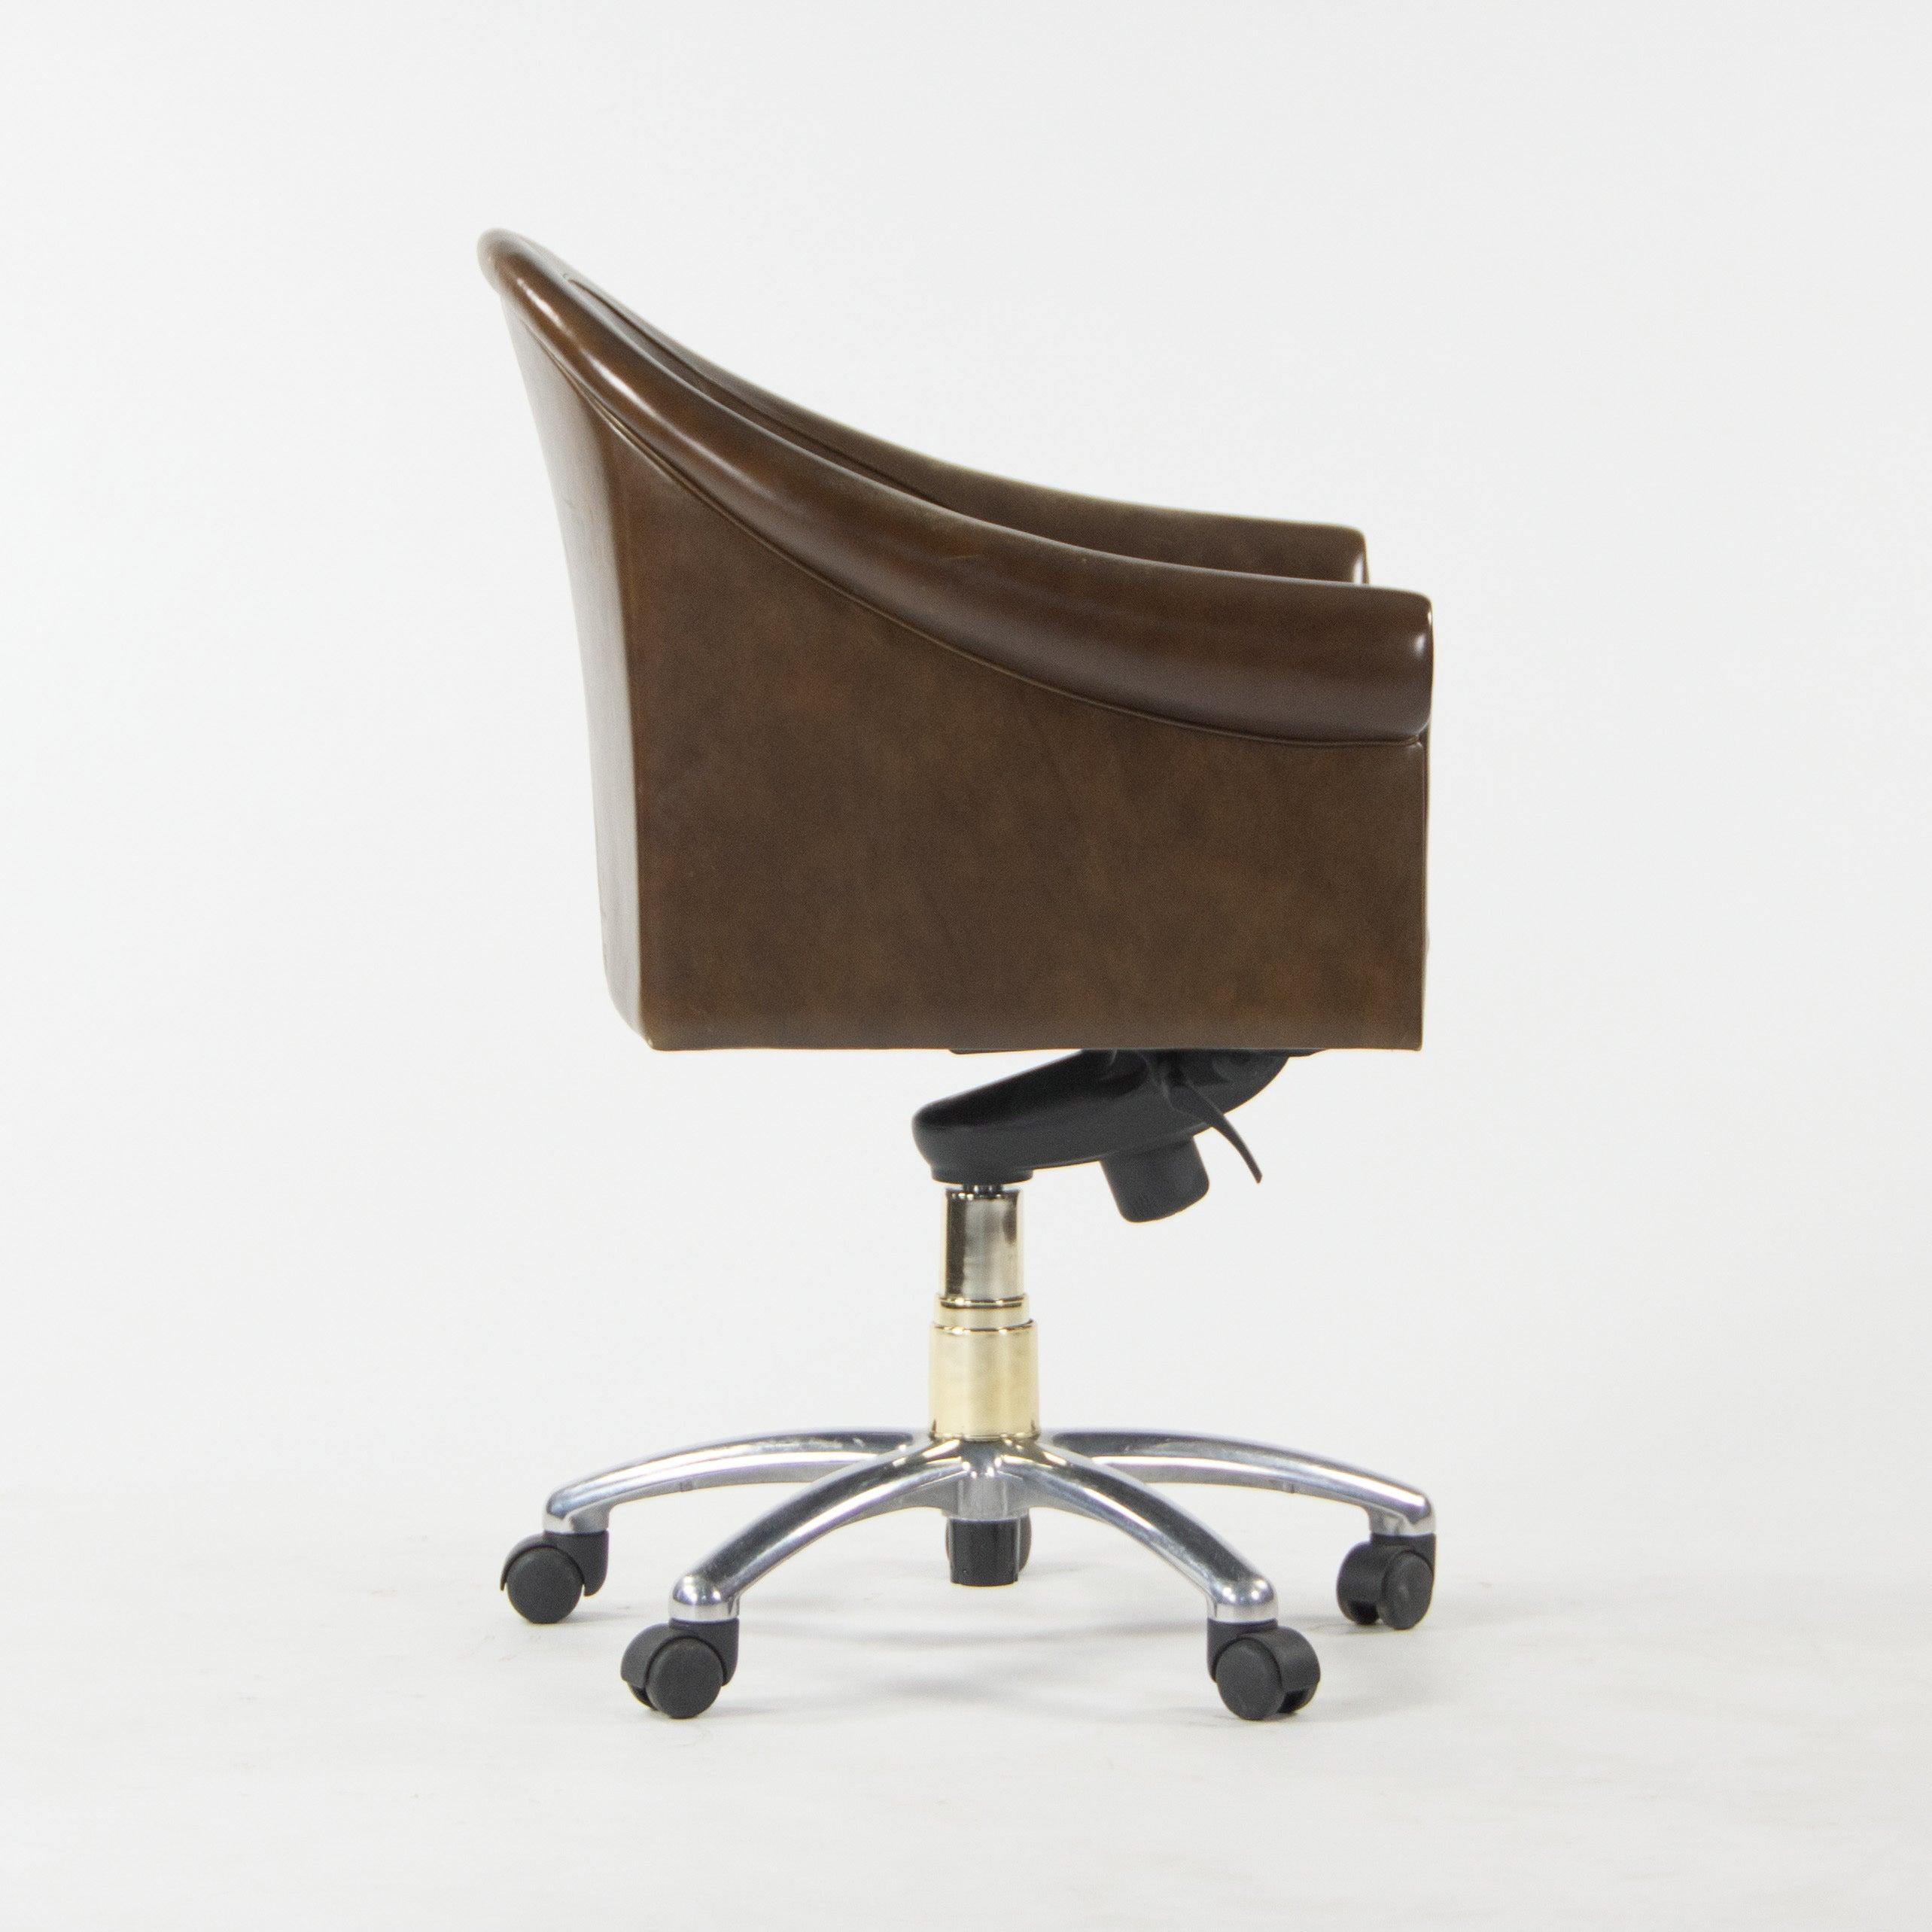 Modern Poltrona Frau Brown Leather Luca Scacchetti Sinan Office Desk Chair For Sale